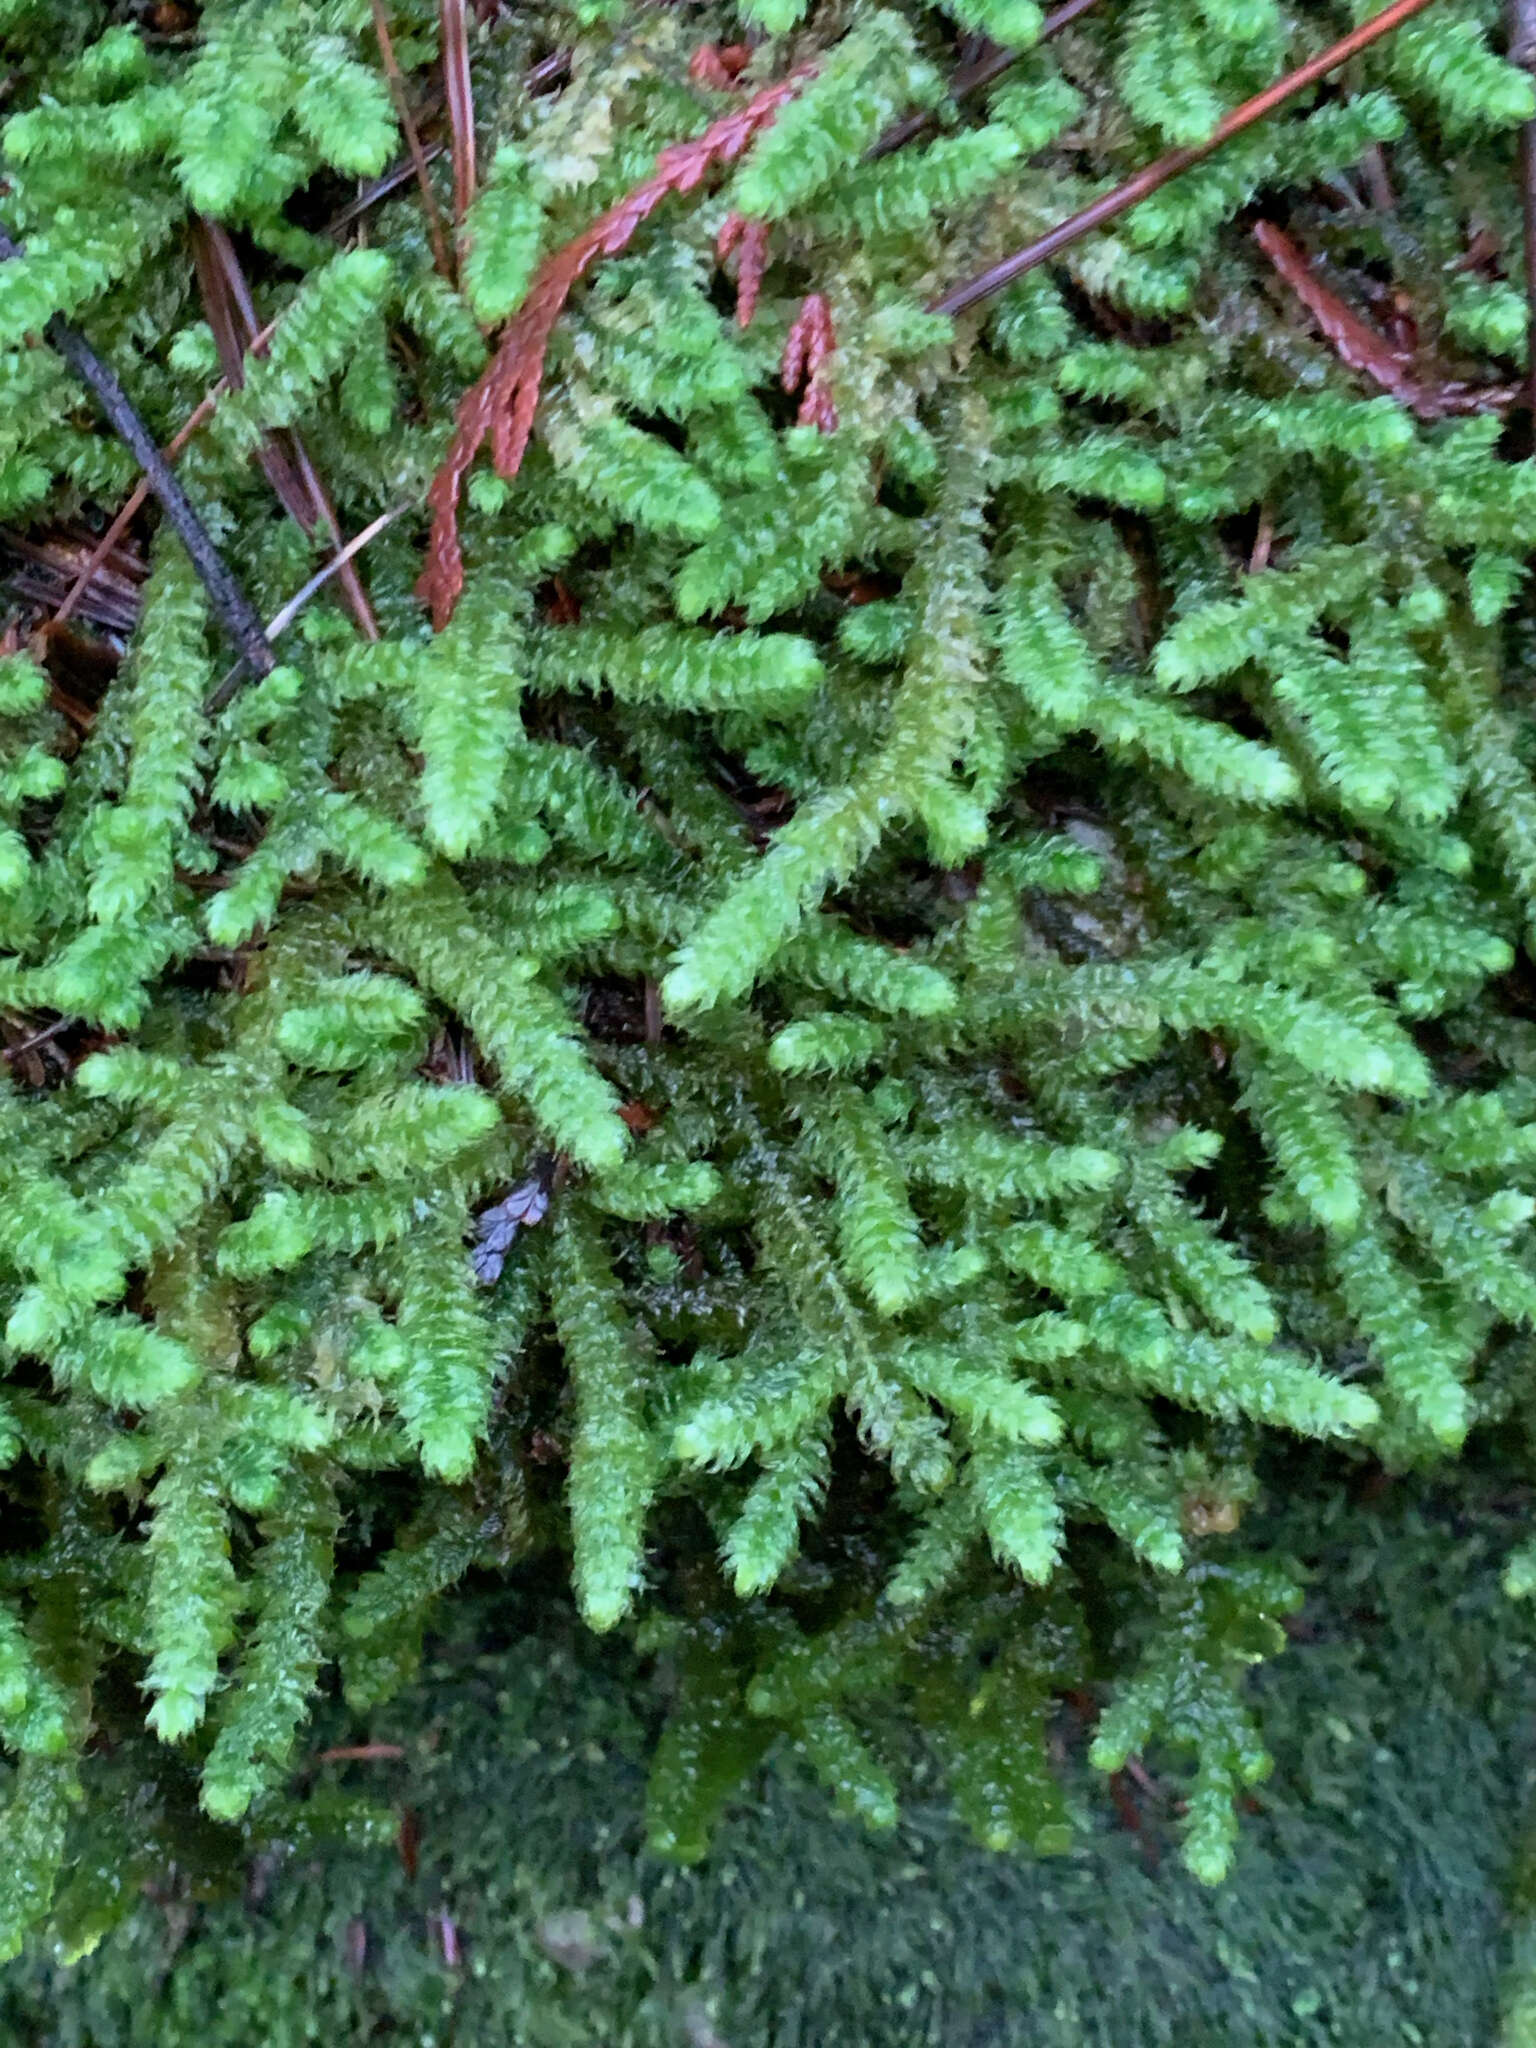 Image of robust rhytidiopsis moss